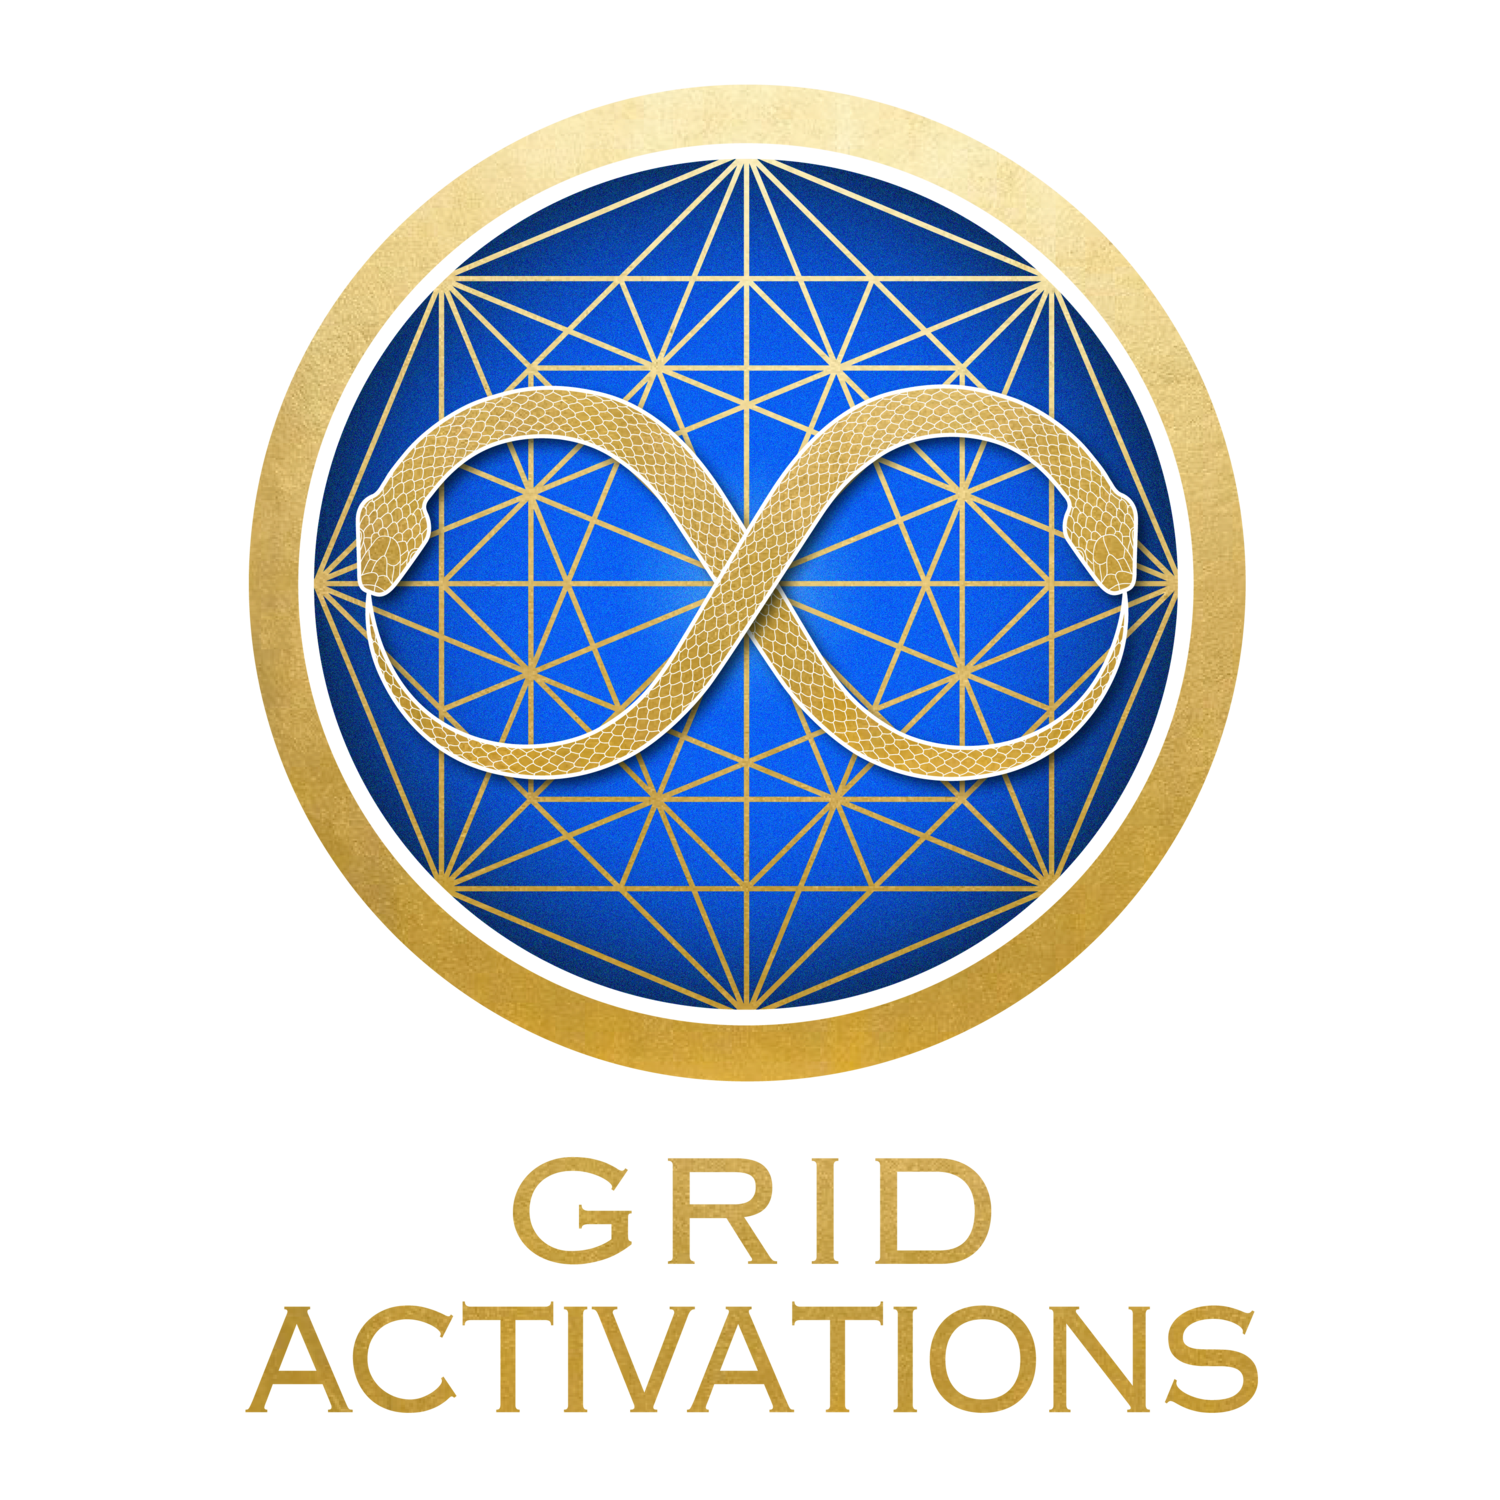 Grid activations